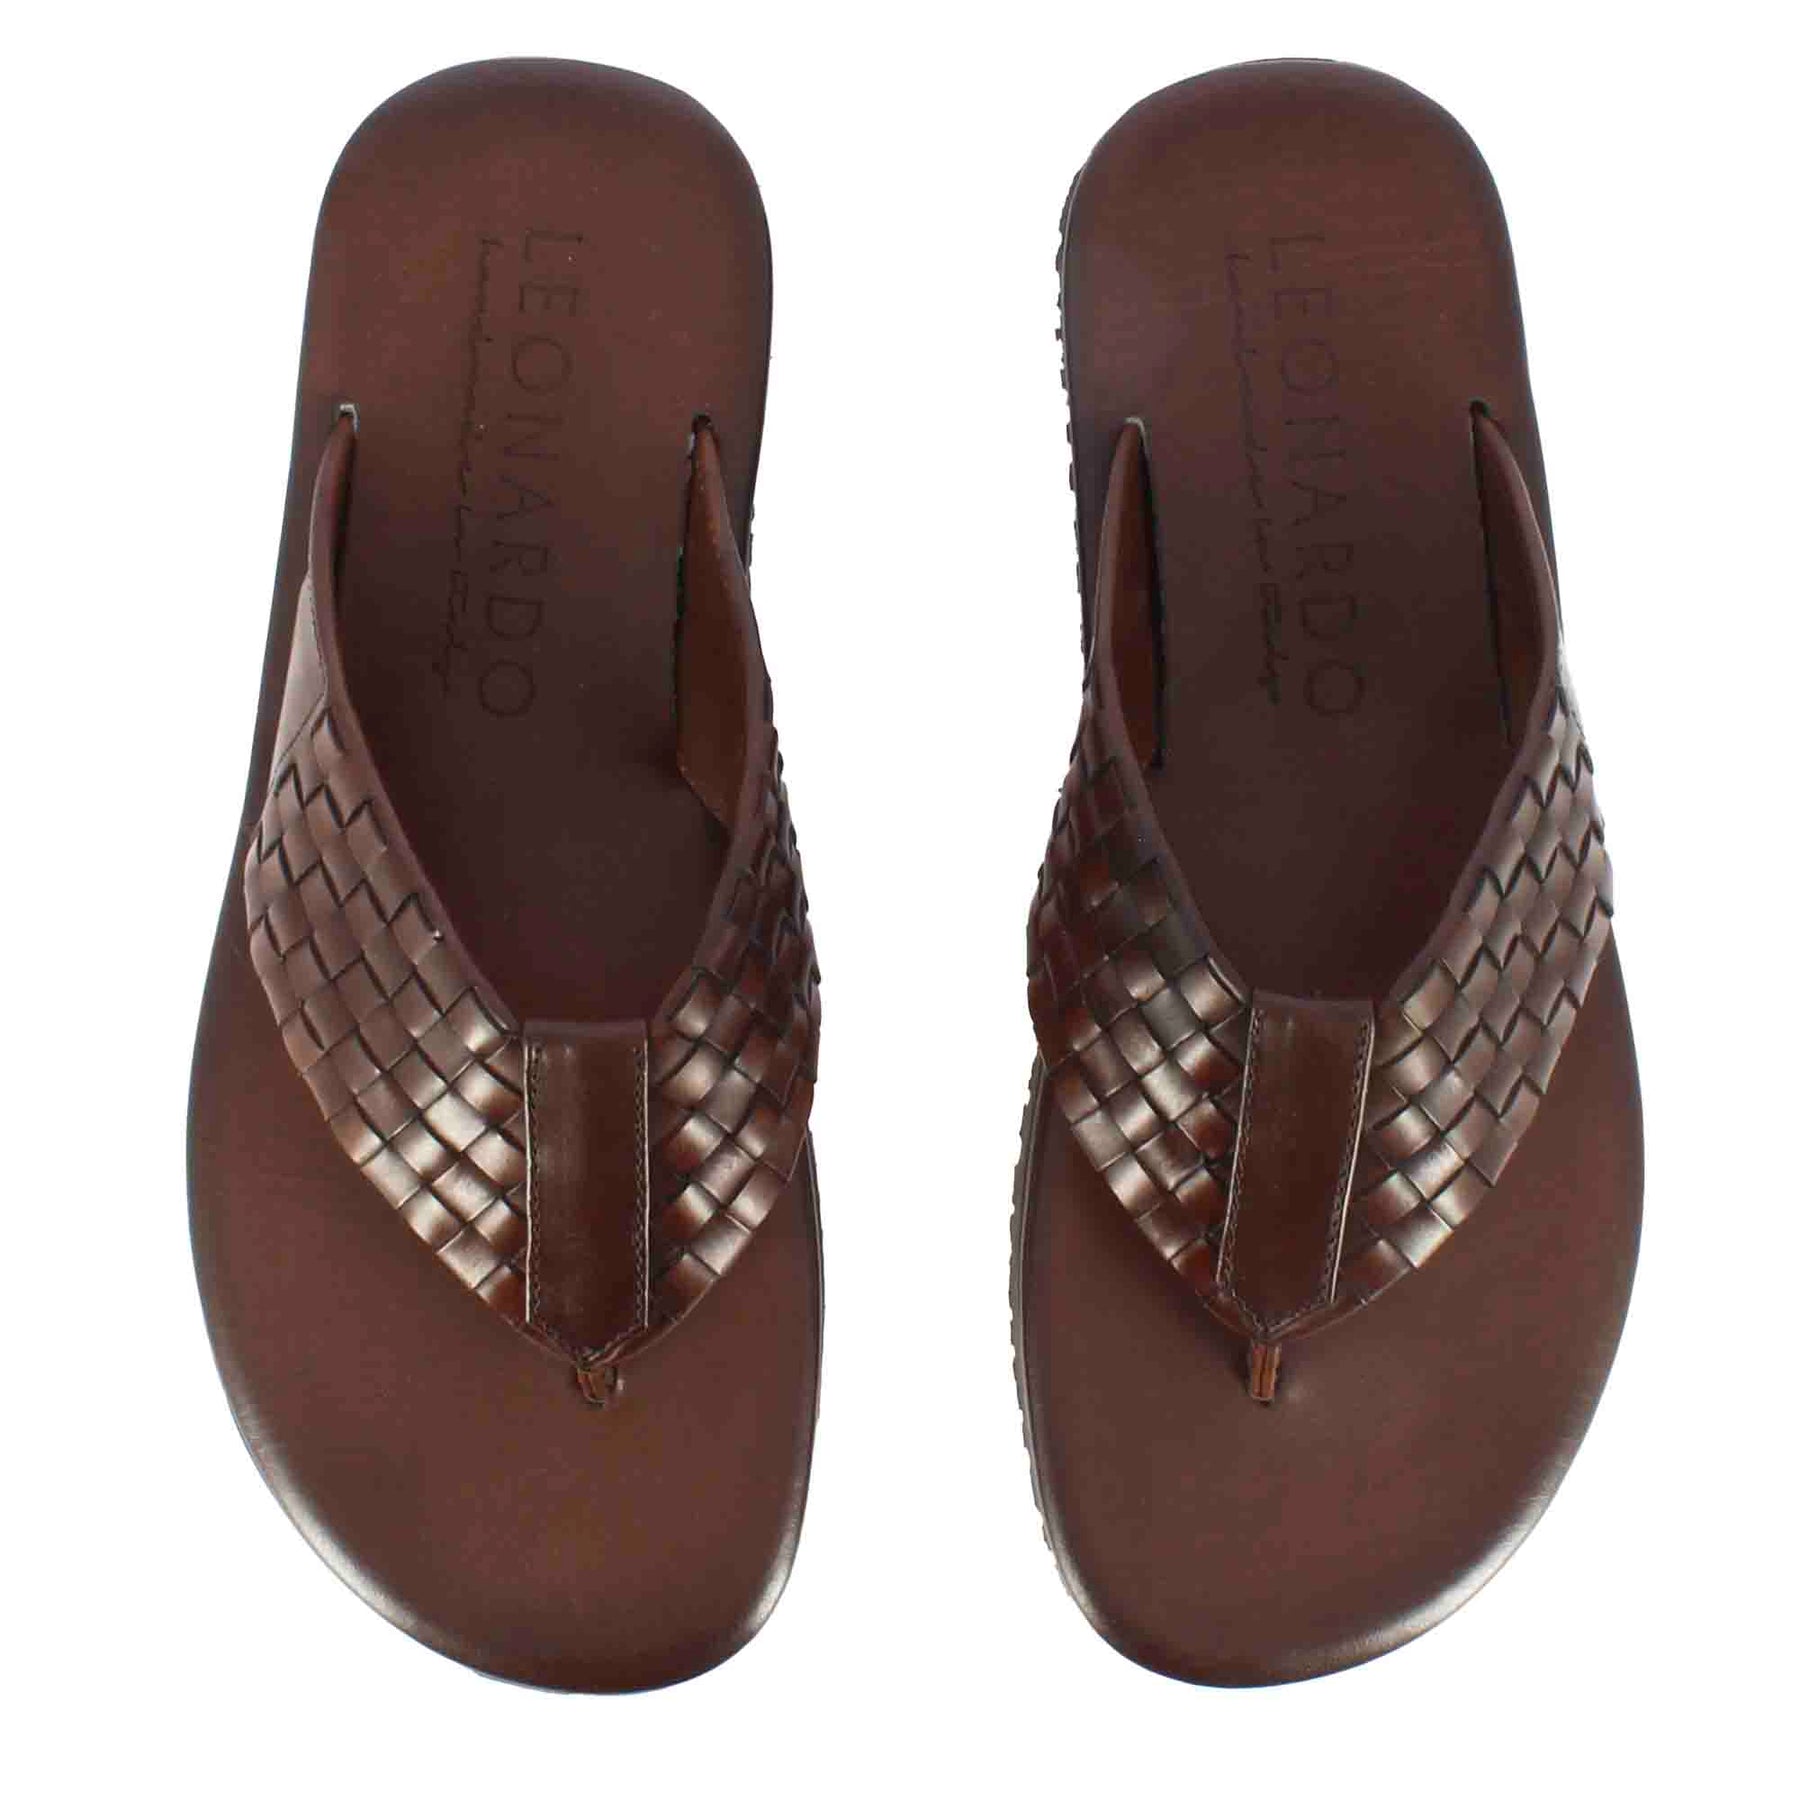 Handmade brown braided leather men's flip flops